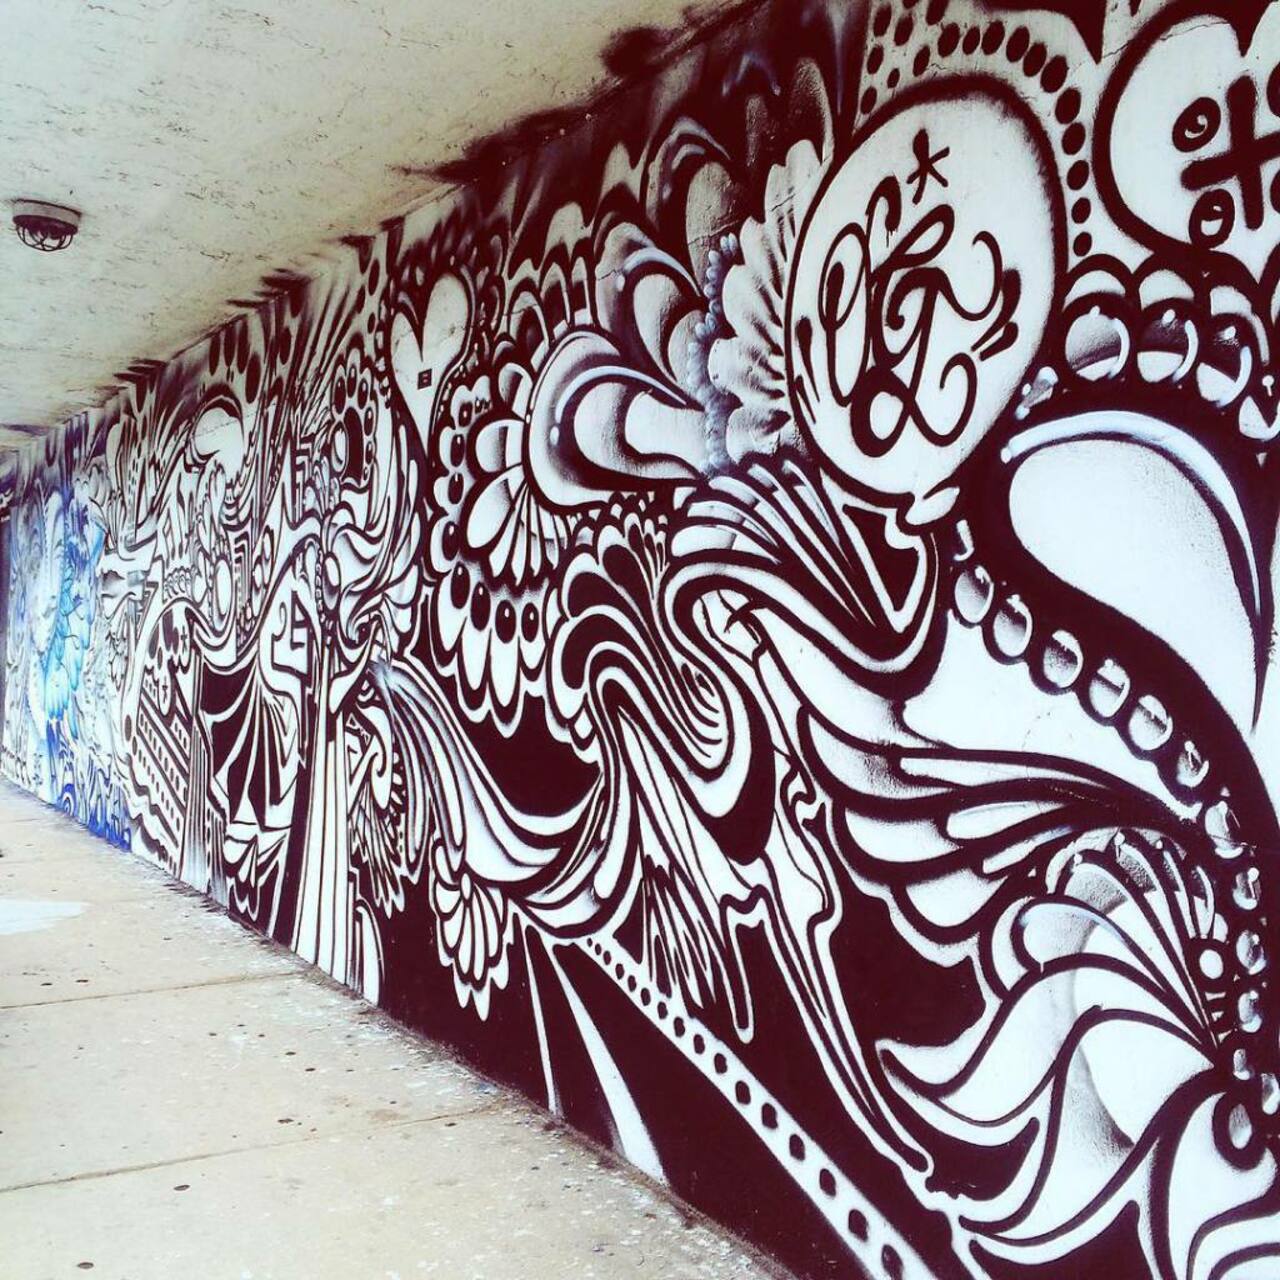 RT @IRUstreetiam: ositodelaselva#wynwood #miami #305#graff #graffiti #graffitiart #graffitiporn#wallart… http://streetiam.com/ositodelaselvawynwood-miami-305graff-graffiti-graffitiart-graffitipornwallart-urbanart-mural-muralsspraypaint-art-streetartstreetarteverywhere/ http://t.co/sbO8muiMZd